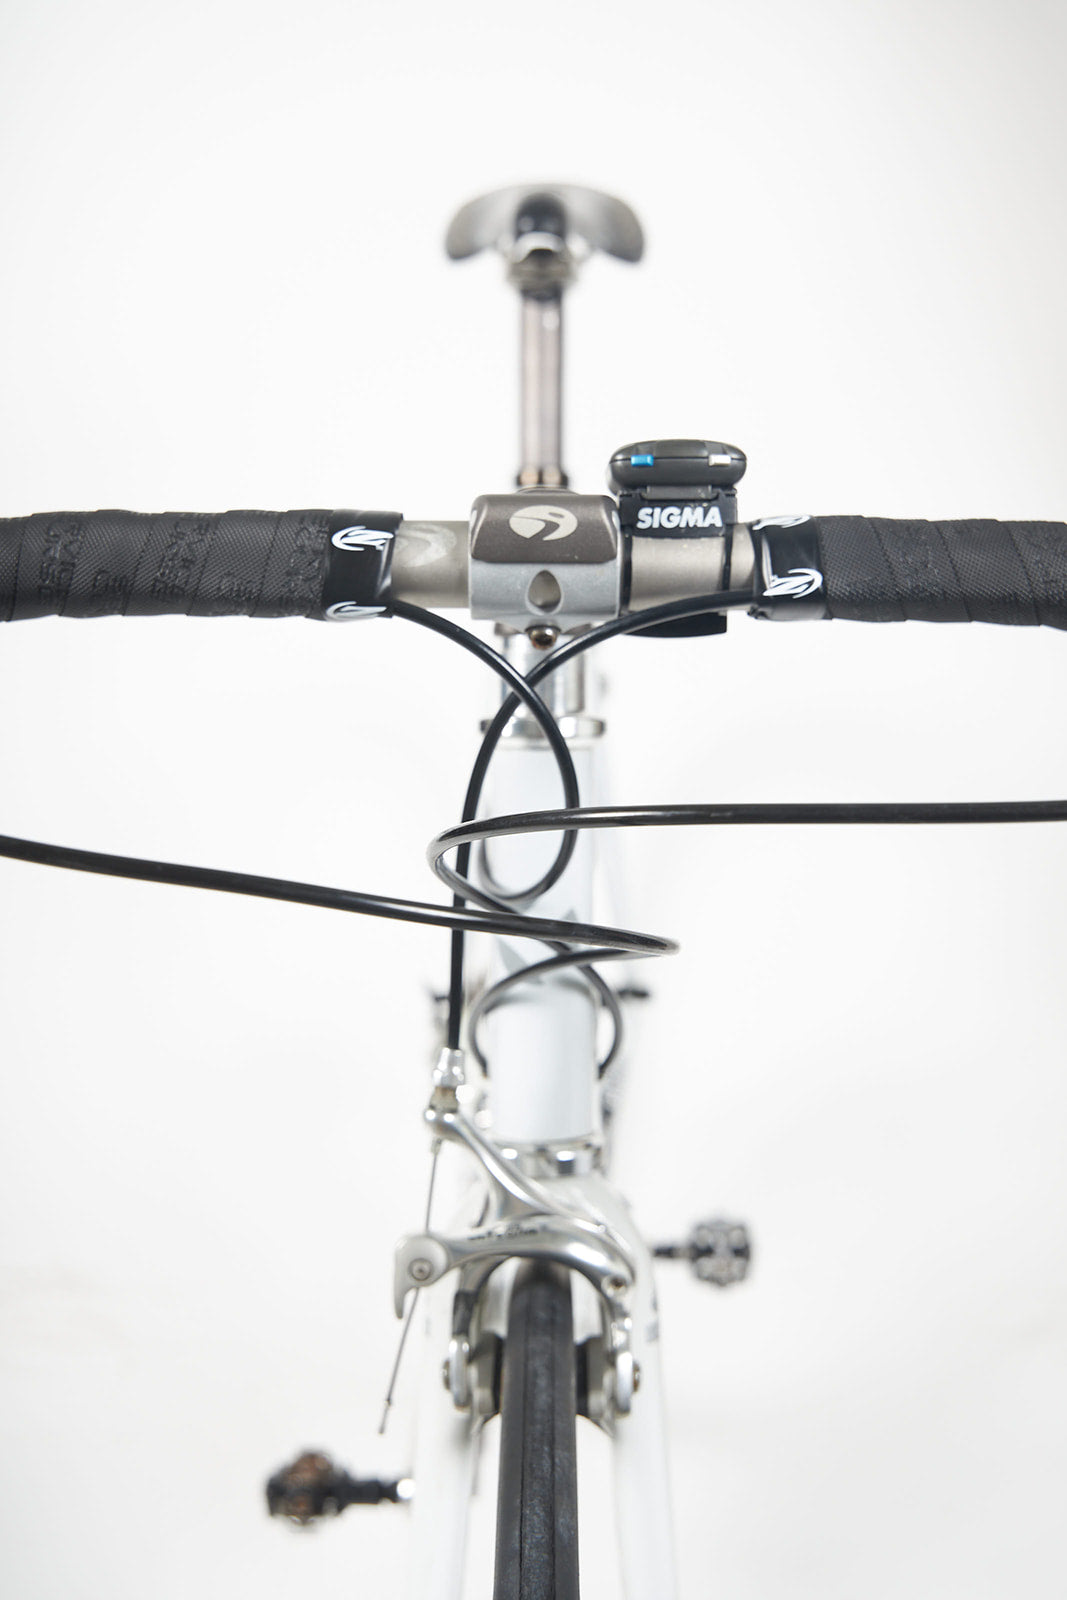 2001 Klein Quantum Race Ultegra Road Bike - 55cm - Pre-Owned